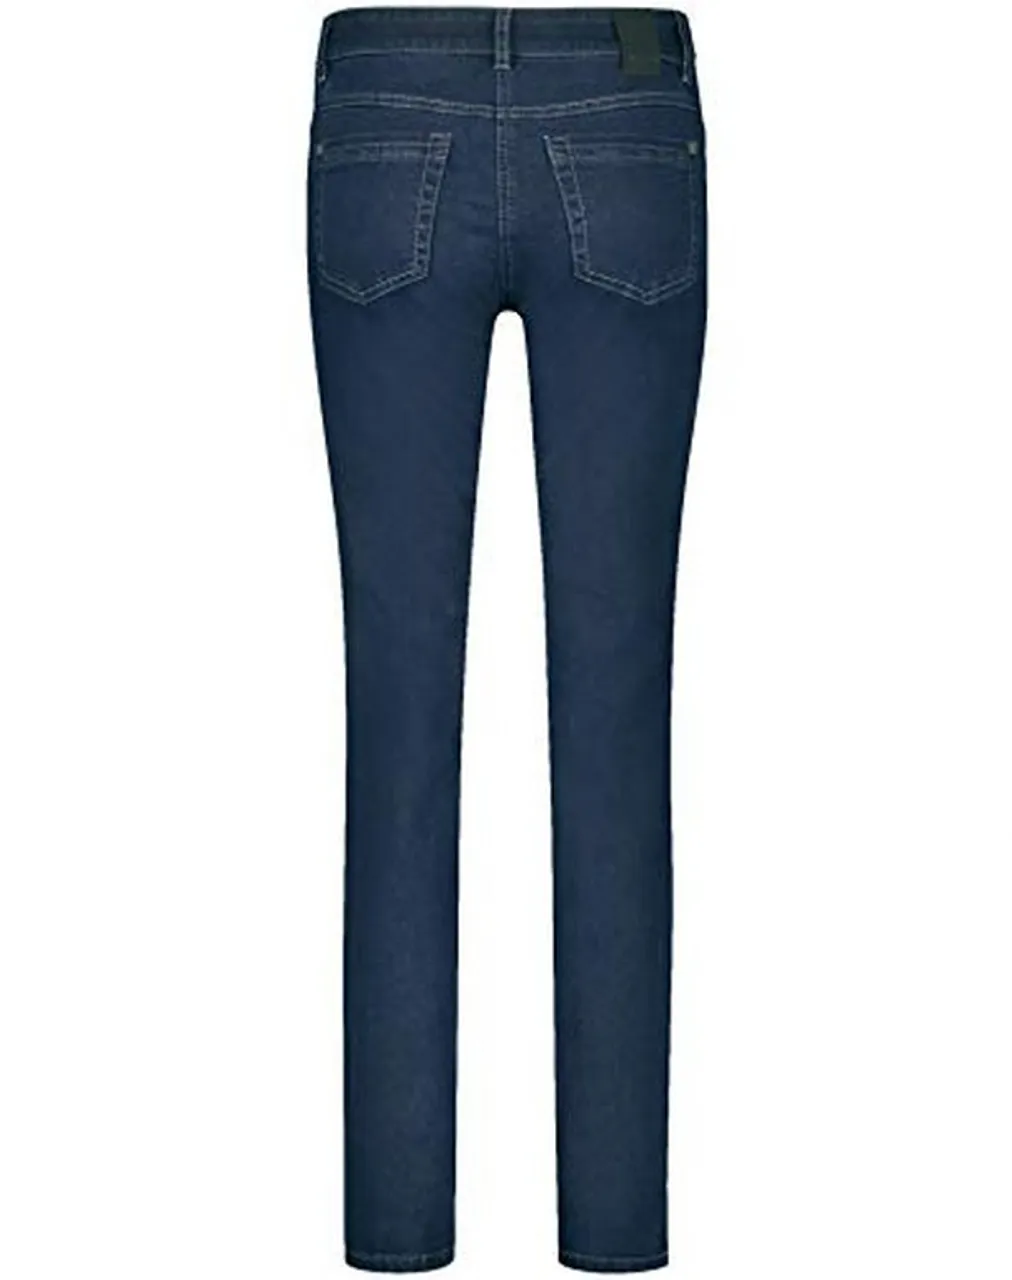 Slim Fit Jeans HOSE JEANS LANG - STRAIGHT FIT